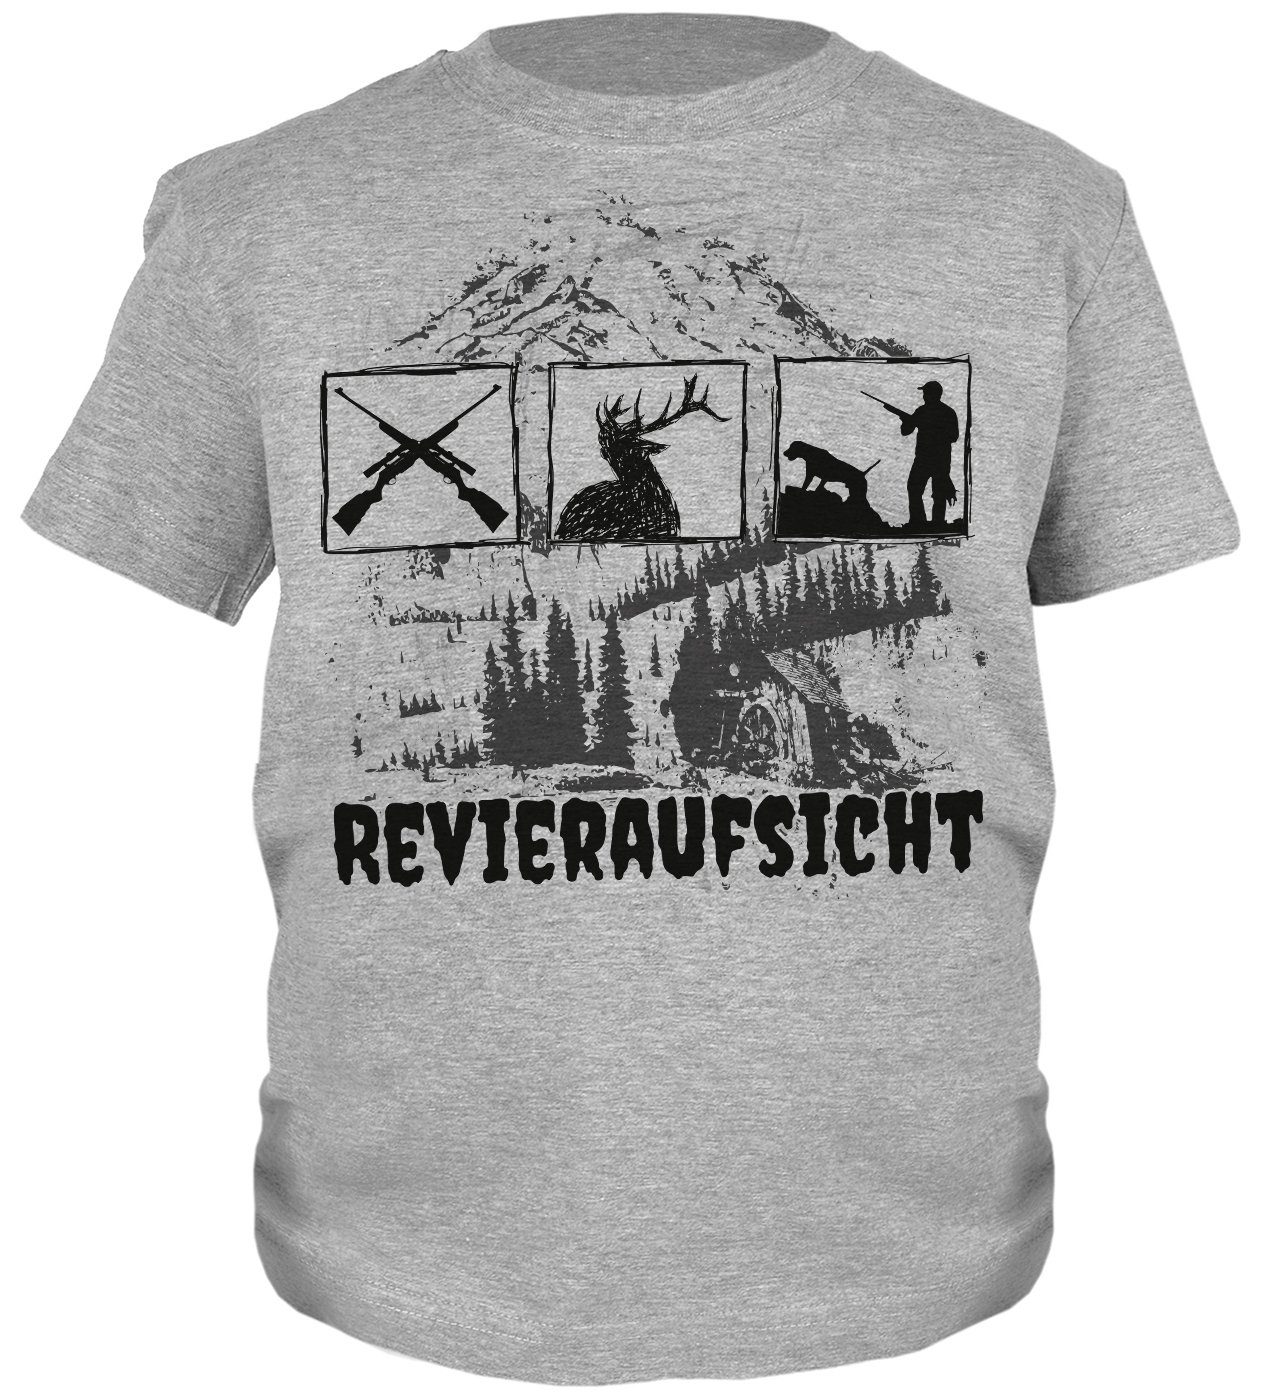 Kind T-Shirt : Jagdmotiv Shirts Jäger Shirt Kinder - Hirsch Revieraufsicht Tini